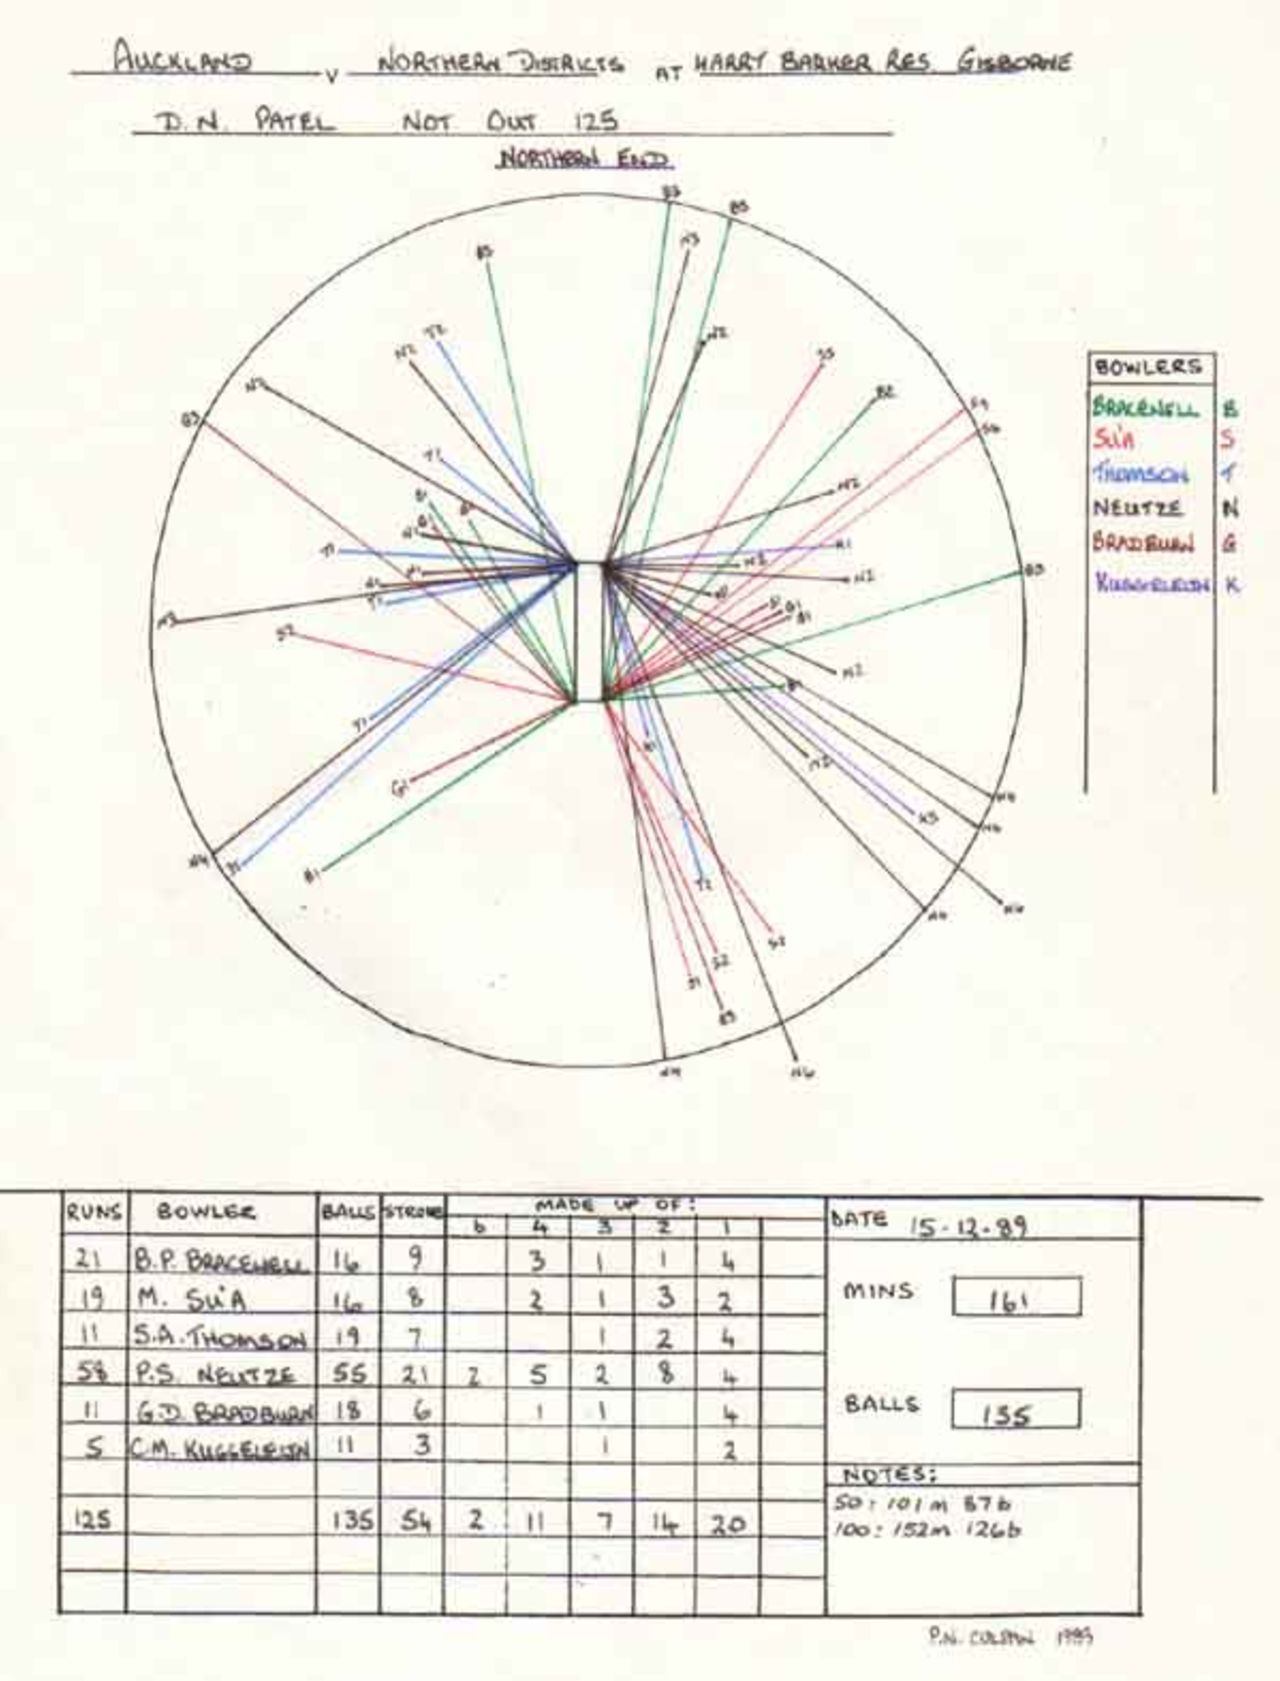 Wagon Wheel of Dipak Patel's 125 v Northern Districts, Gisborne 15th December 1989